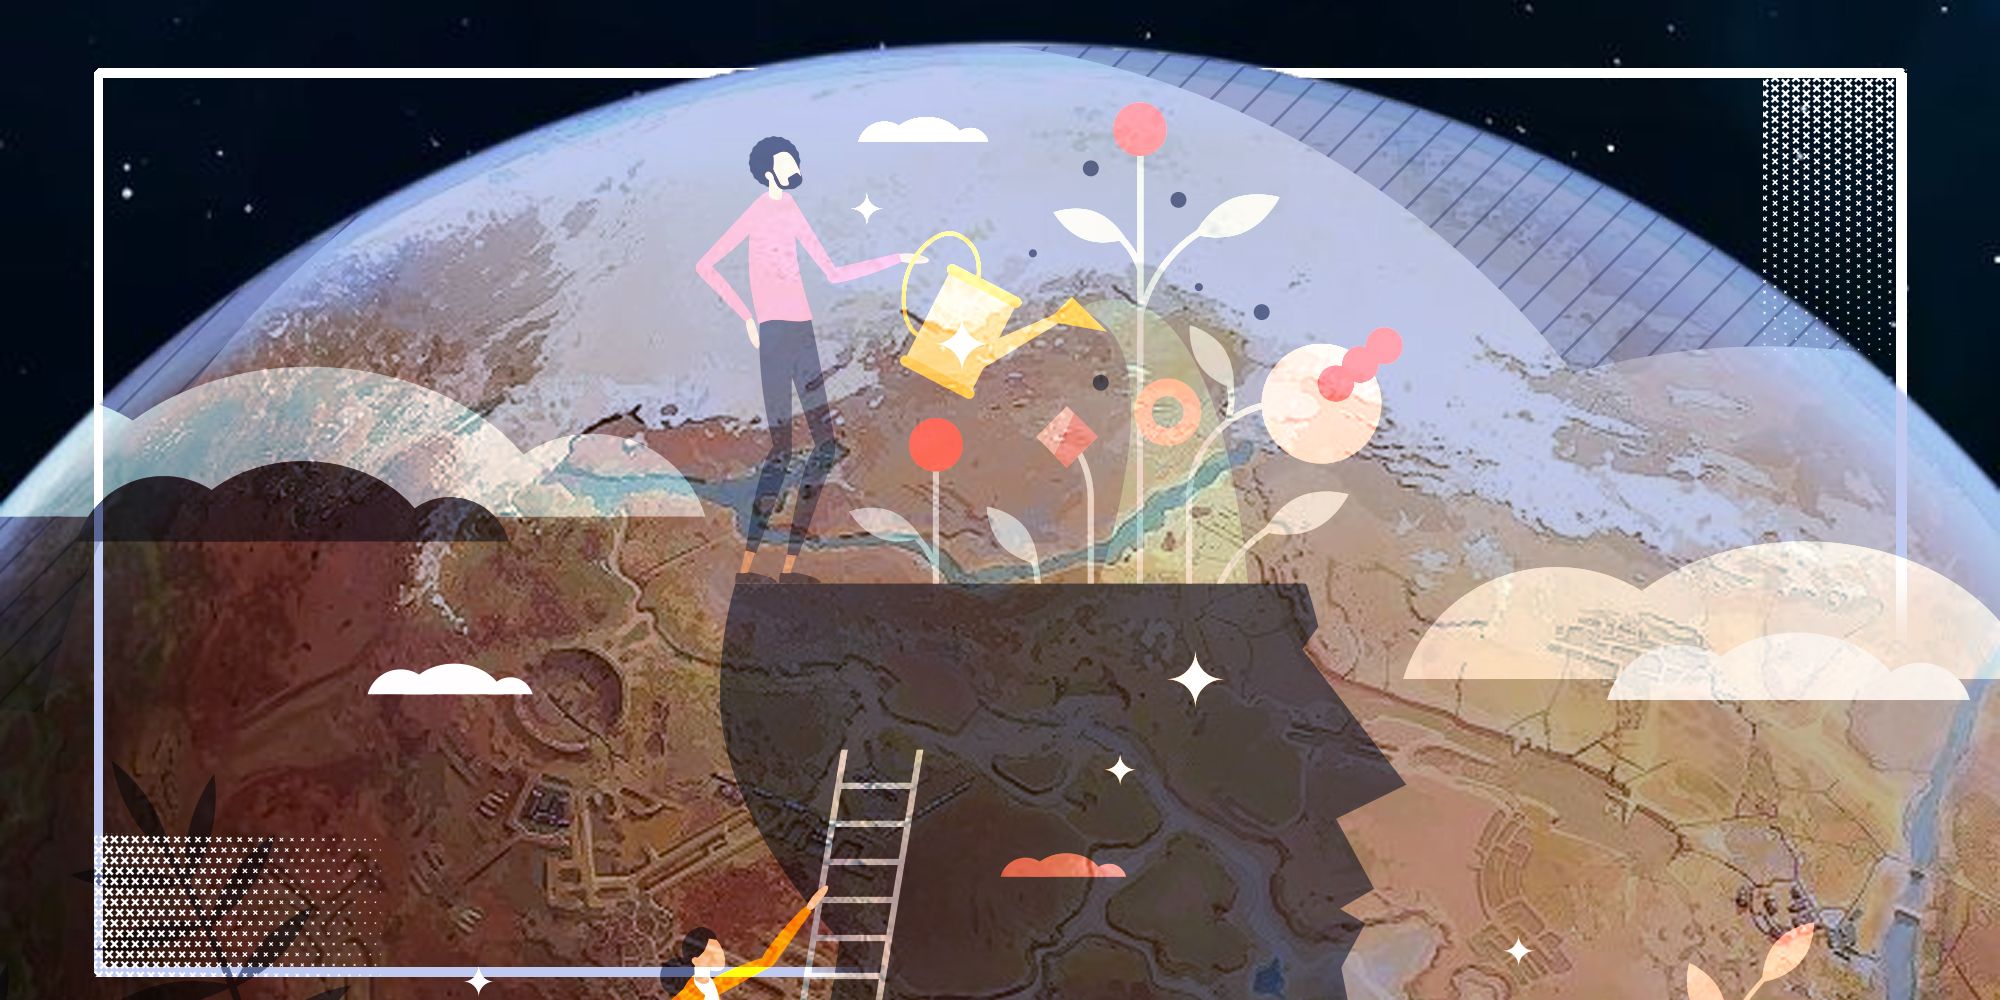 a nice self care mural over a rimworld planet